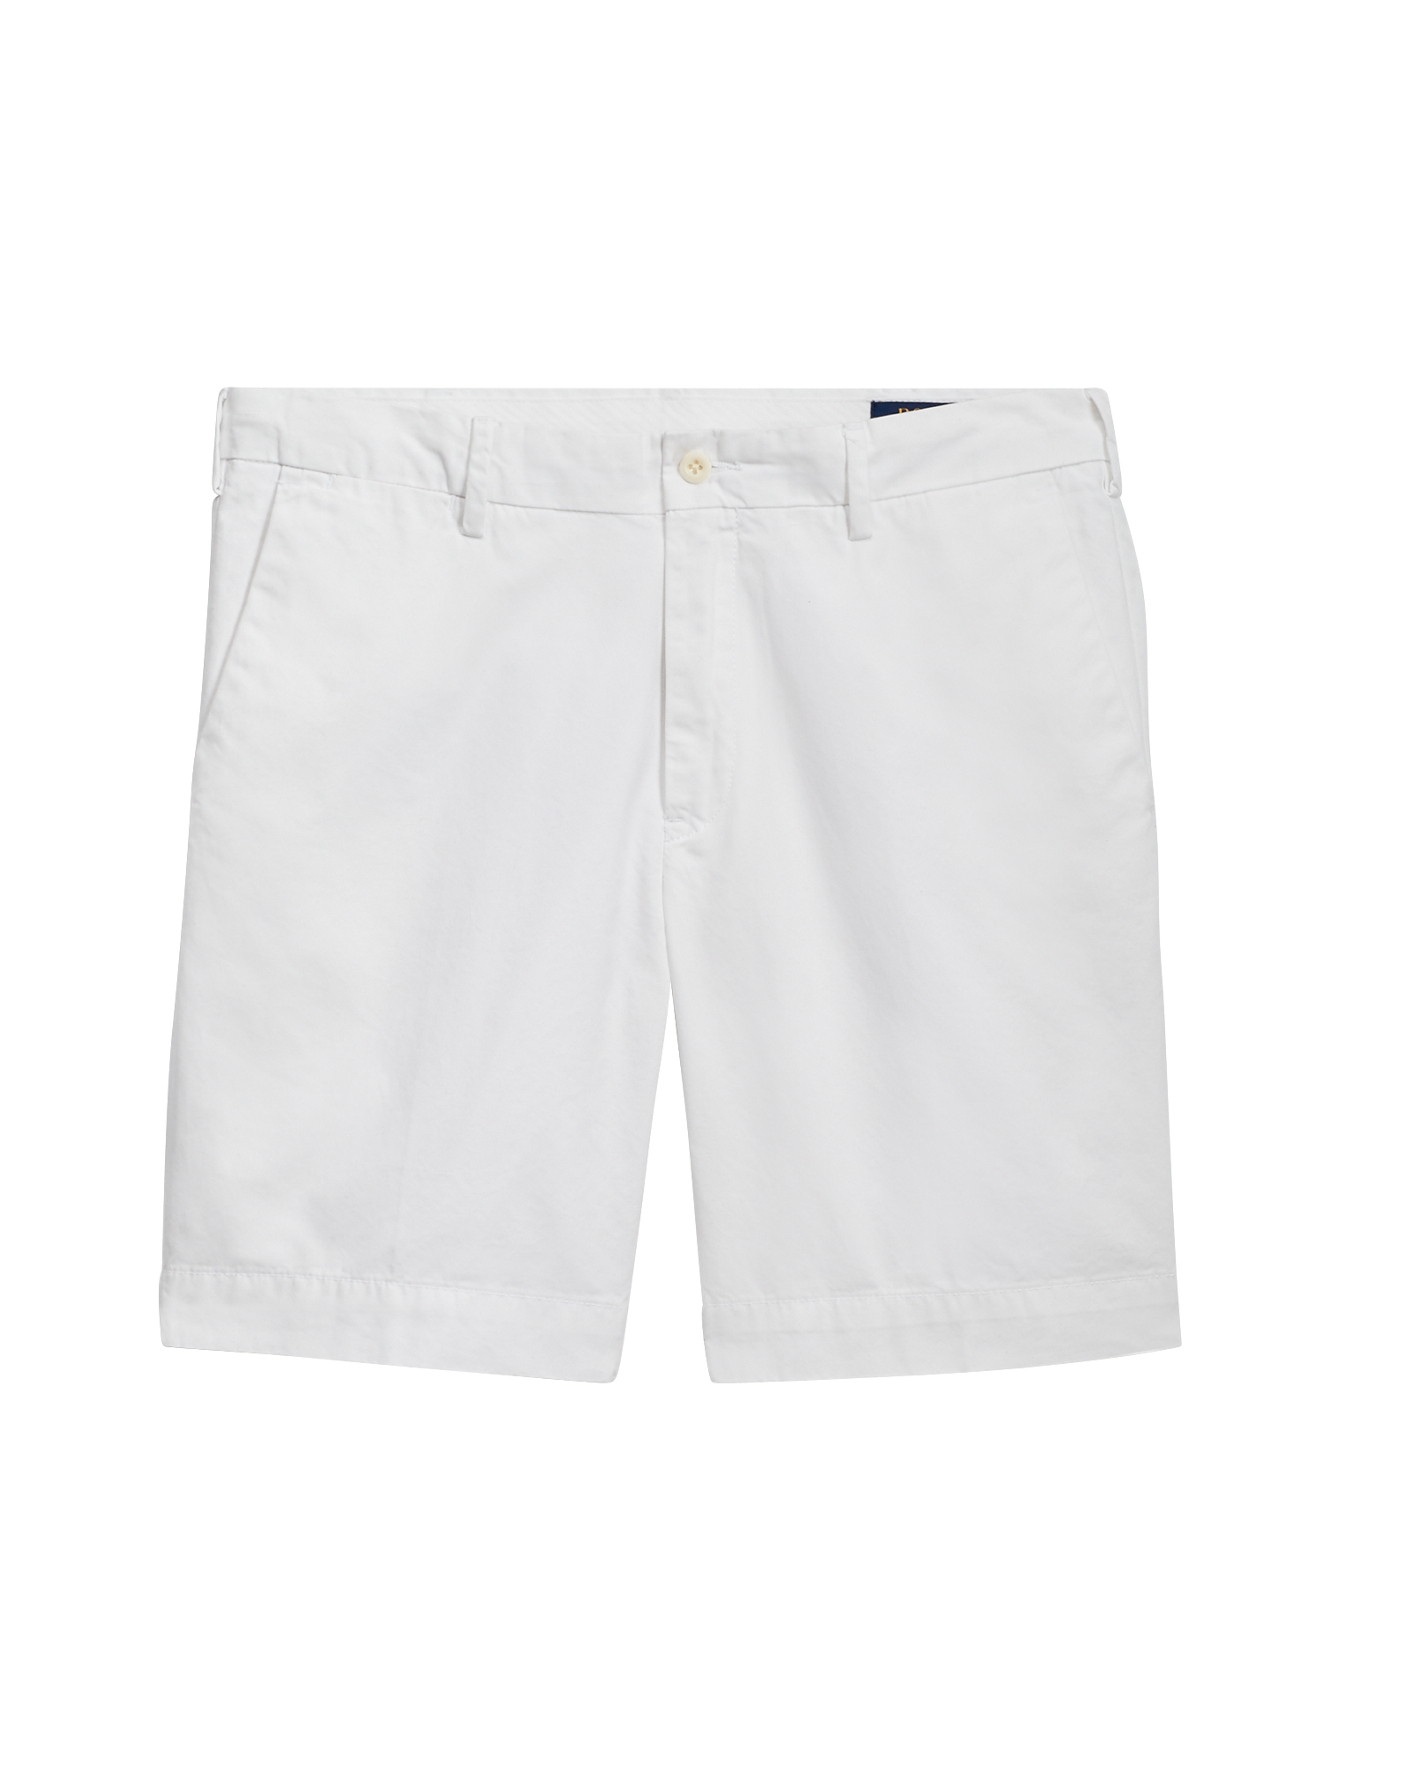 Men's Shorts Sale - Chino, Khaki, Fleece | Ralph Lauren